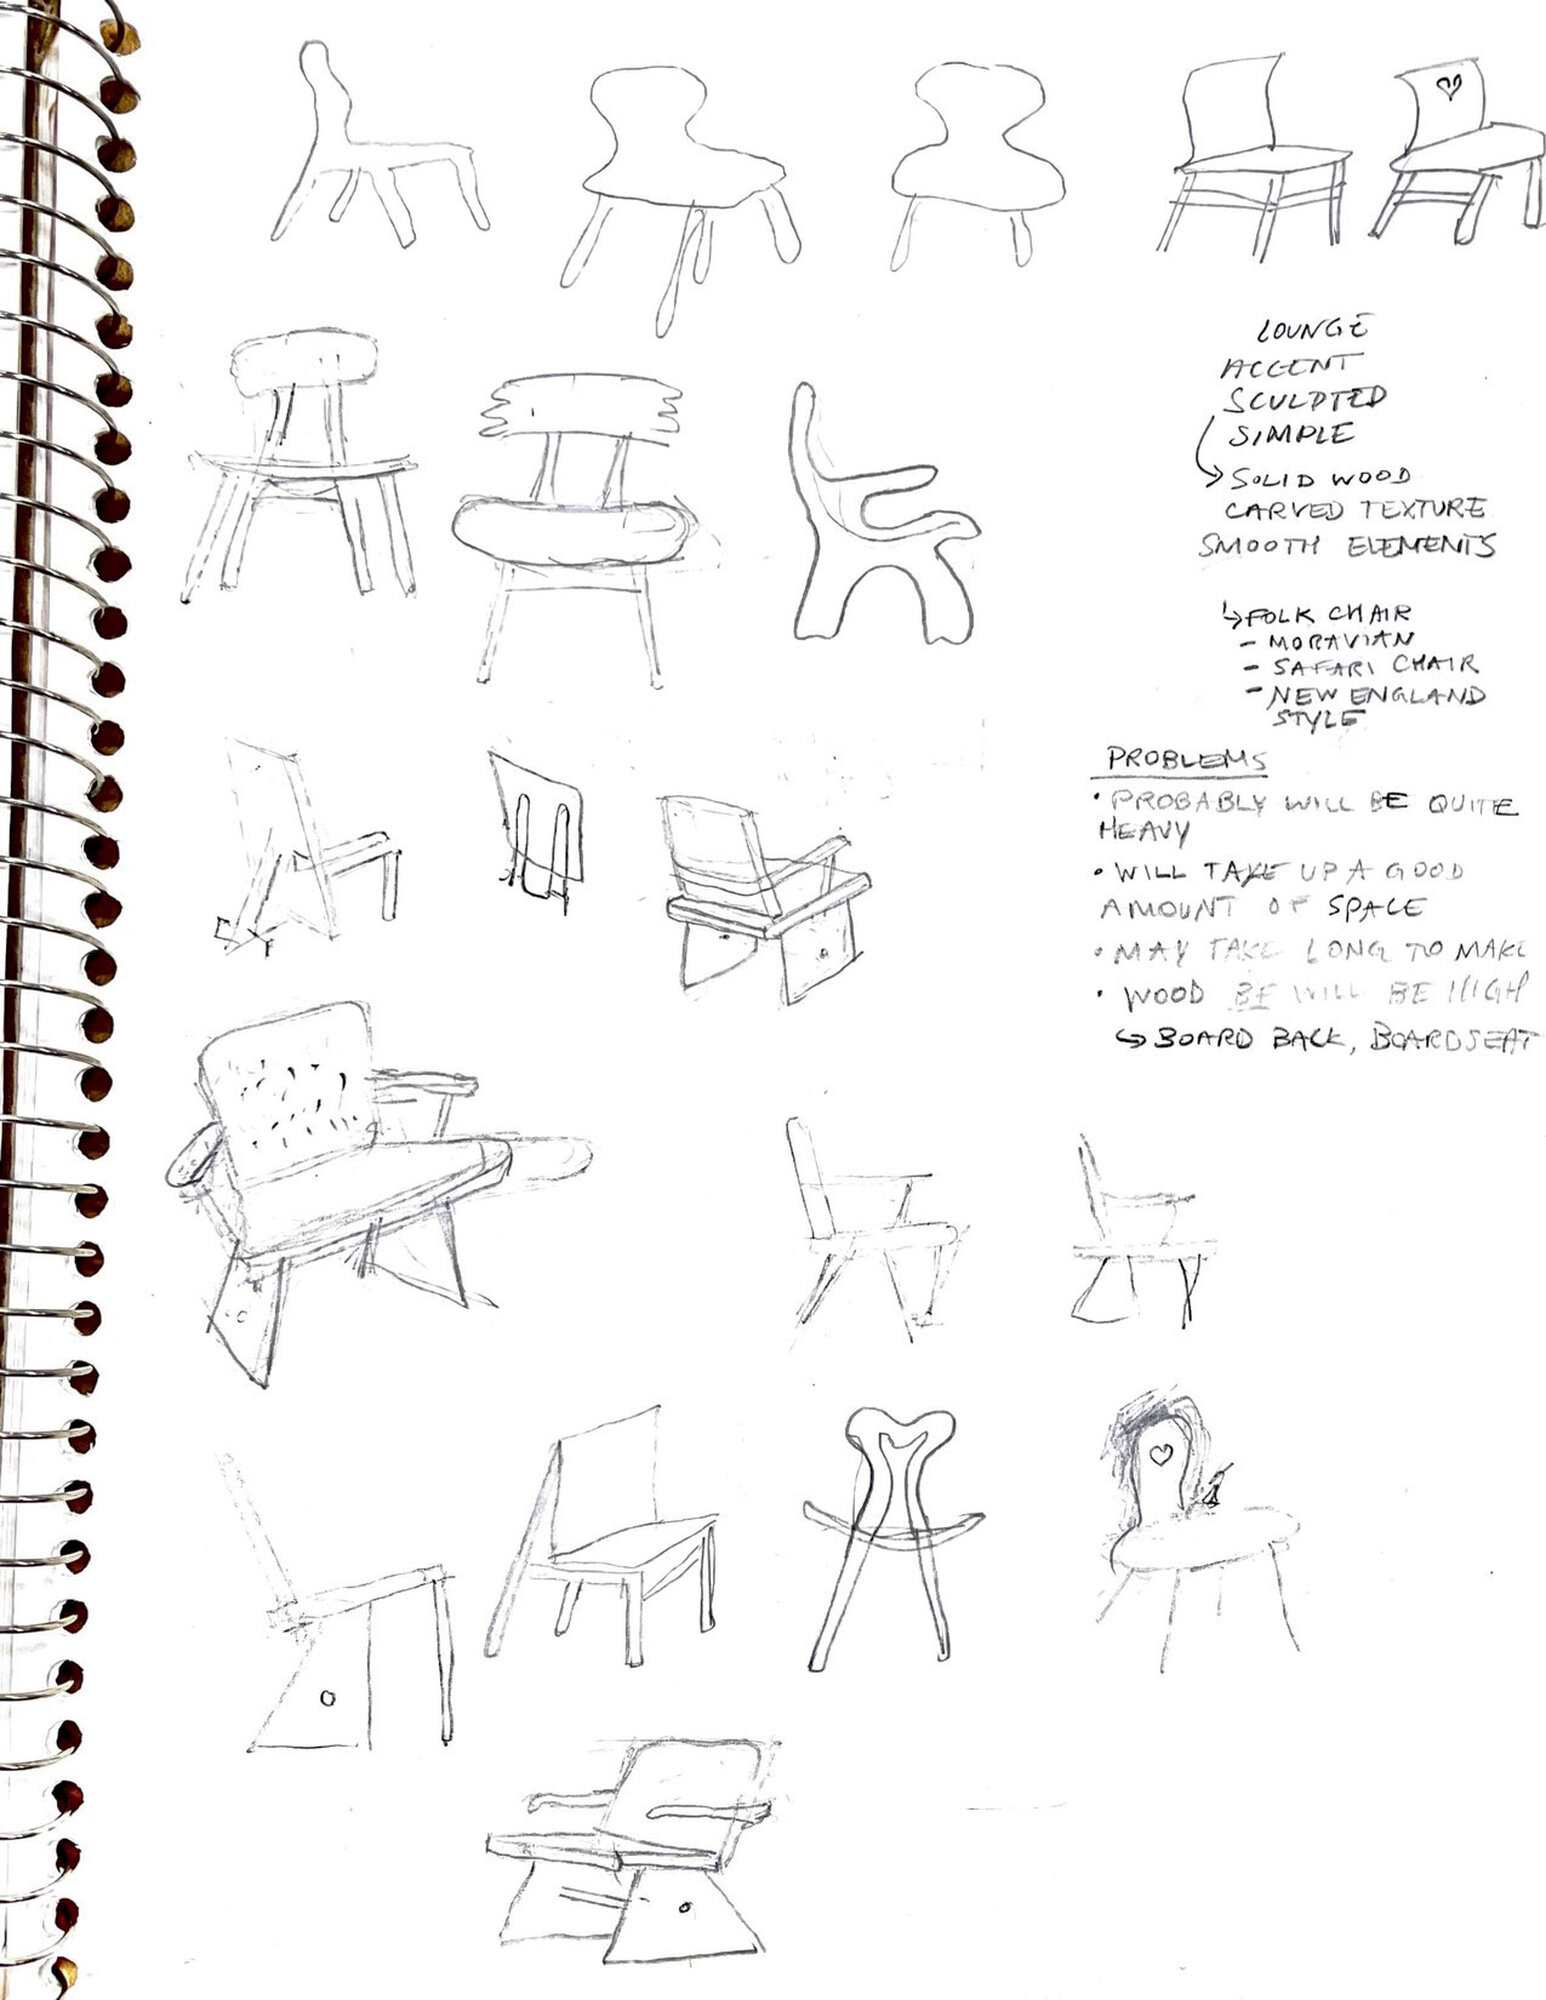 Foran Chair Ideation 8